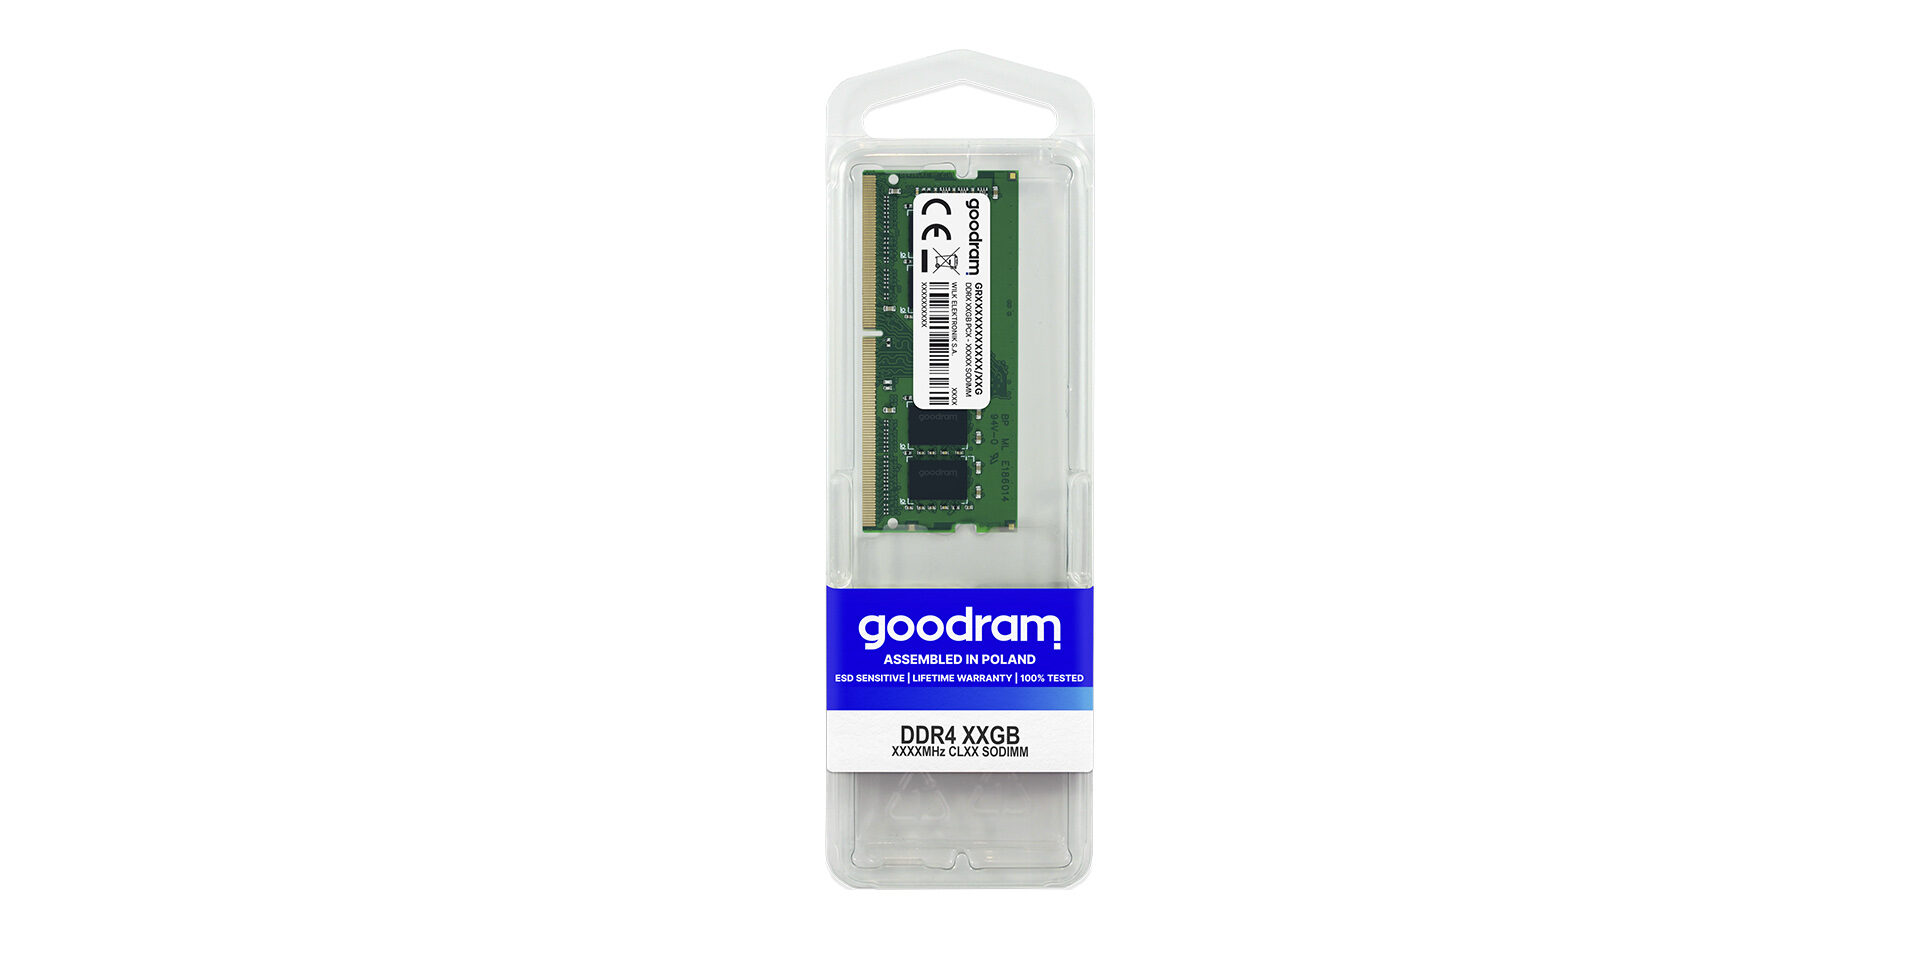 SSD DDR4 SODIMM marki Goodram w opakowaniu